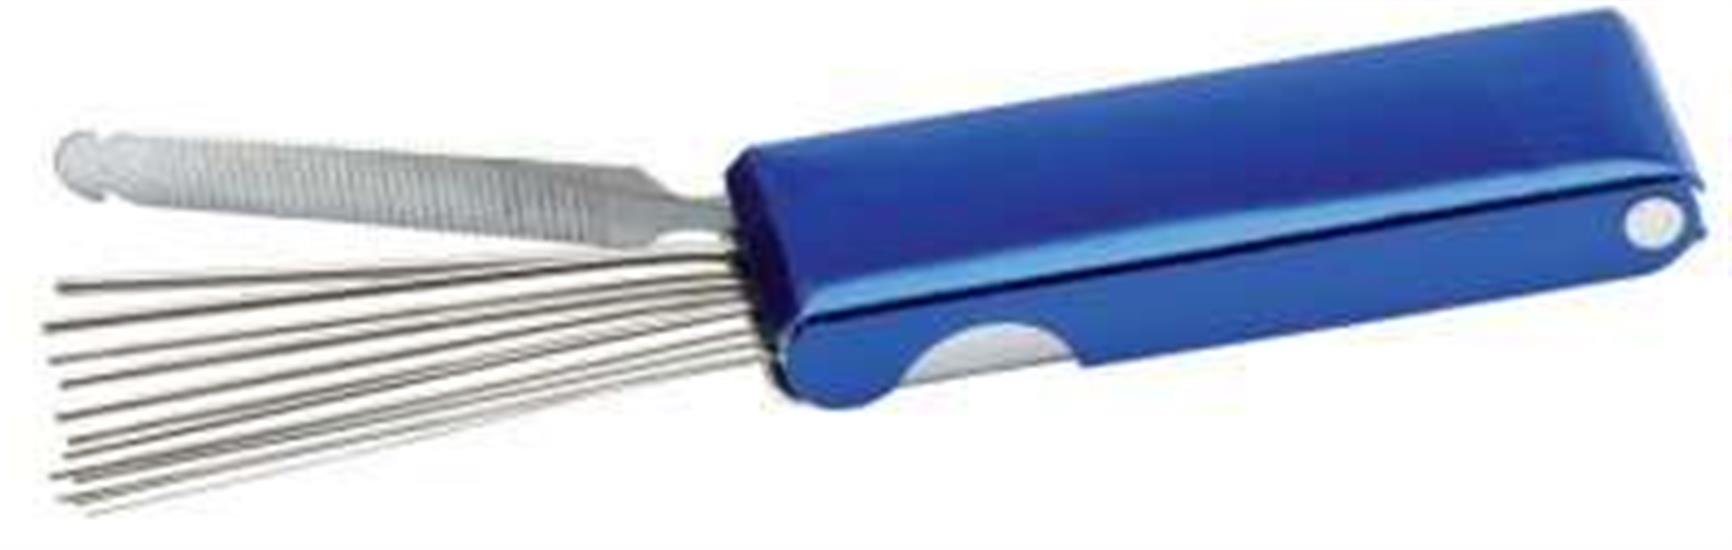 Draper 35105 (W732) - Welding Nozzle Cleaner